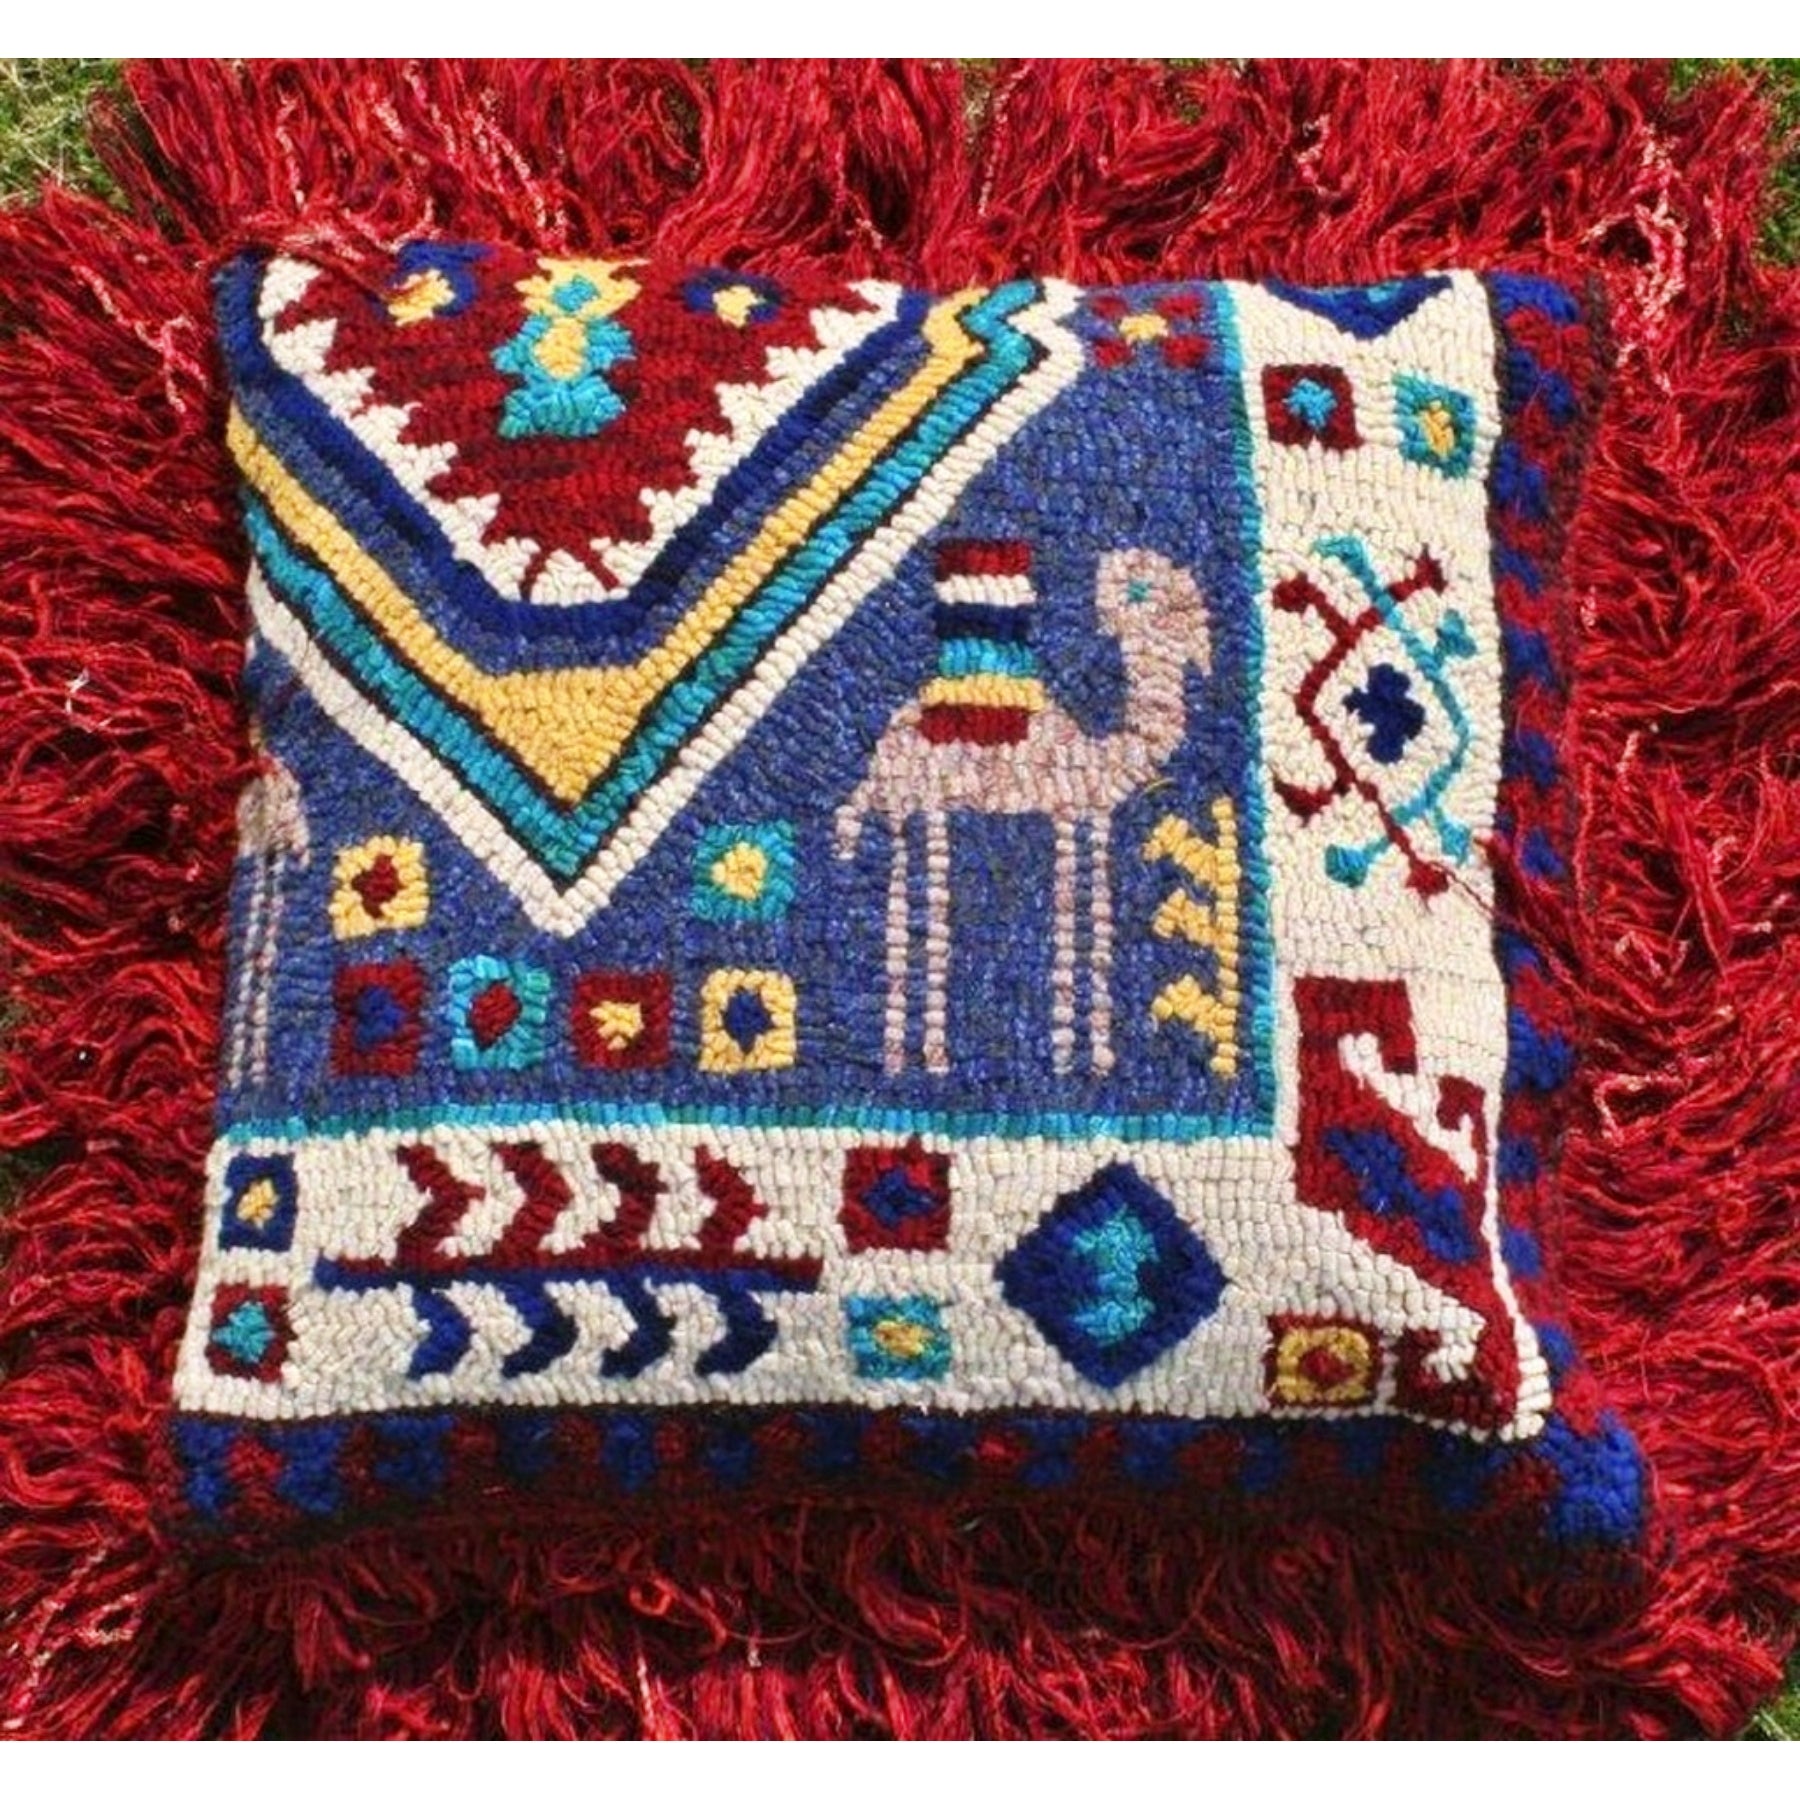 Chahar Mahal, rug hooked by Karen Guffey